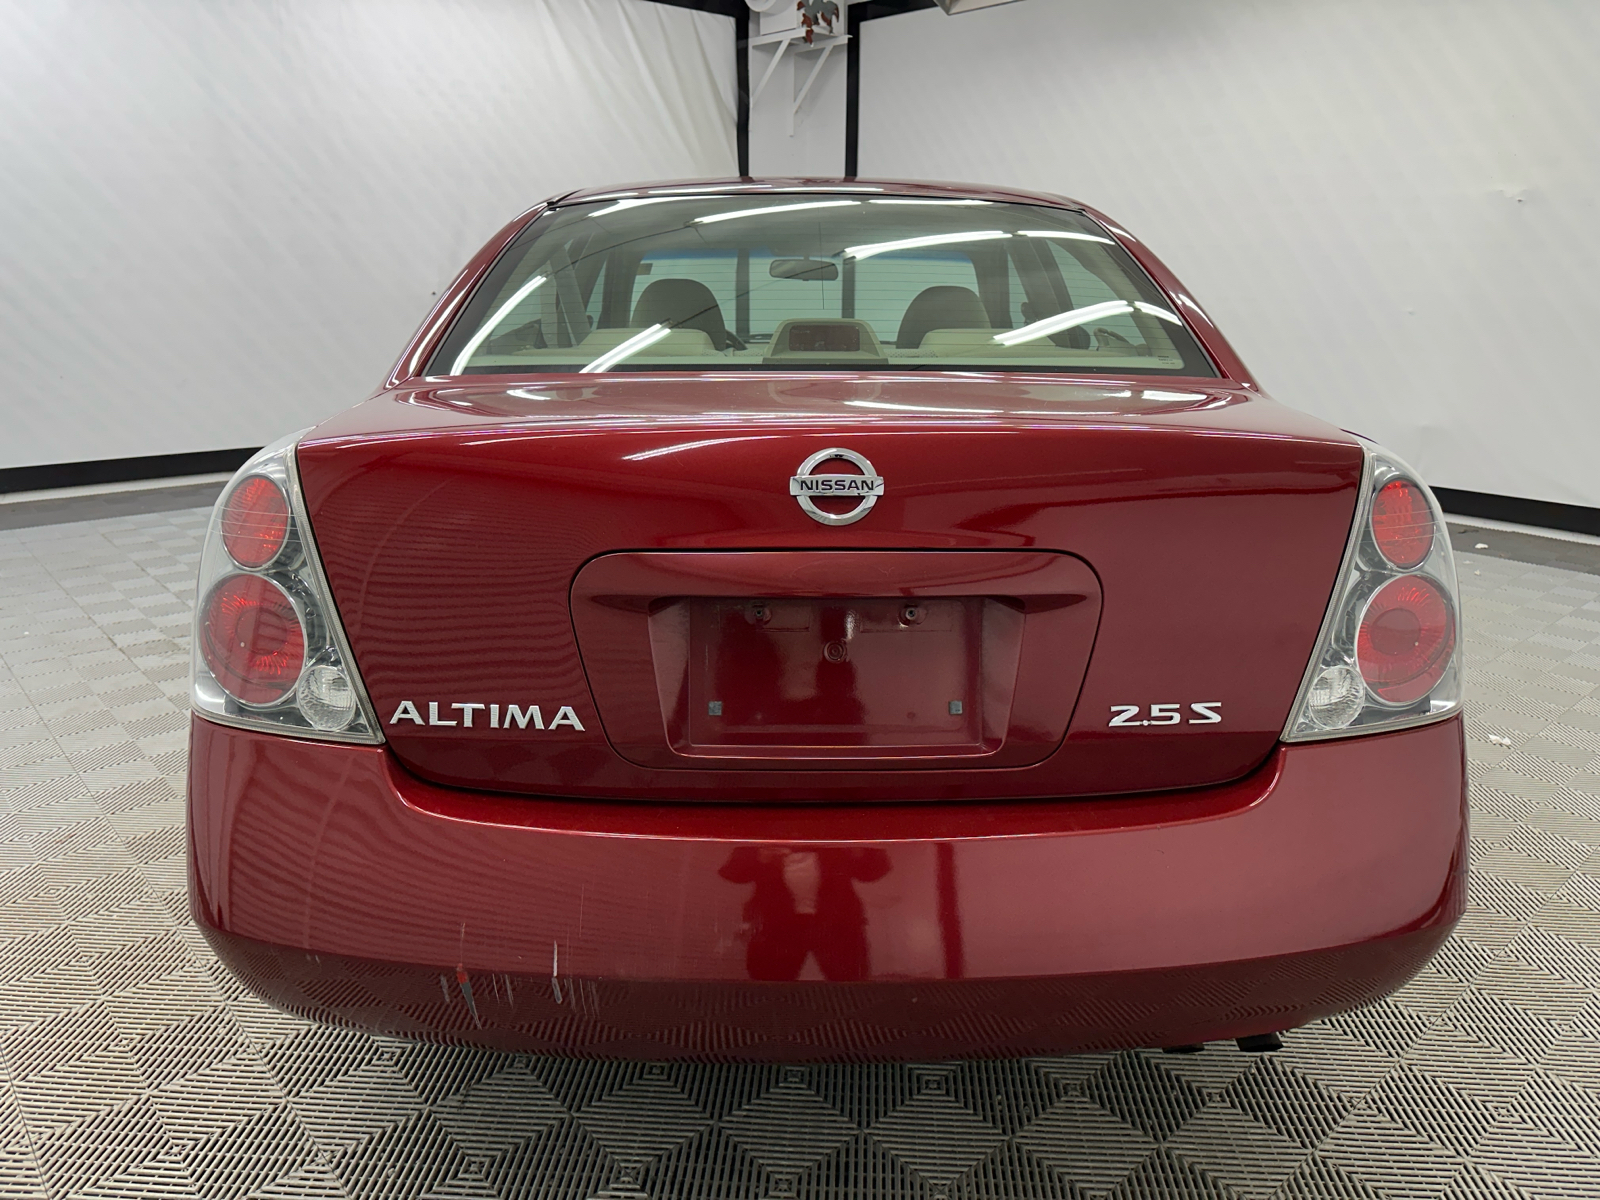 2005 Nissan Altima 2.5 S 4